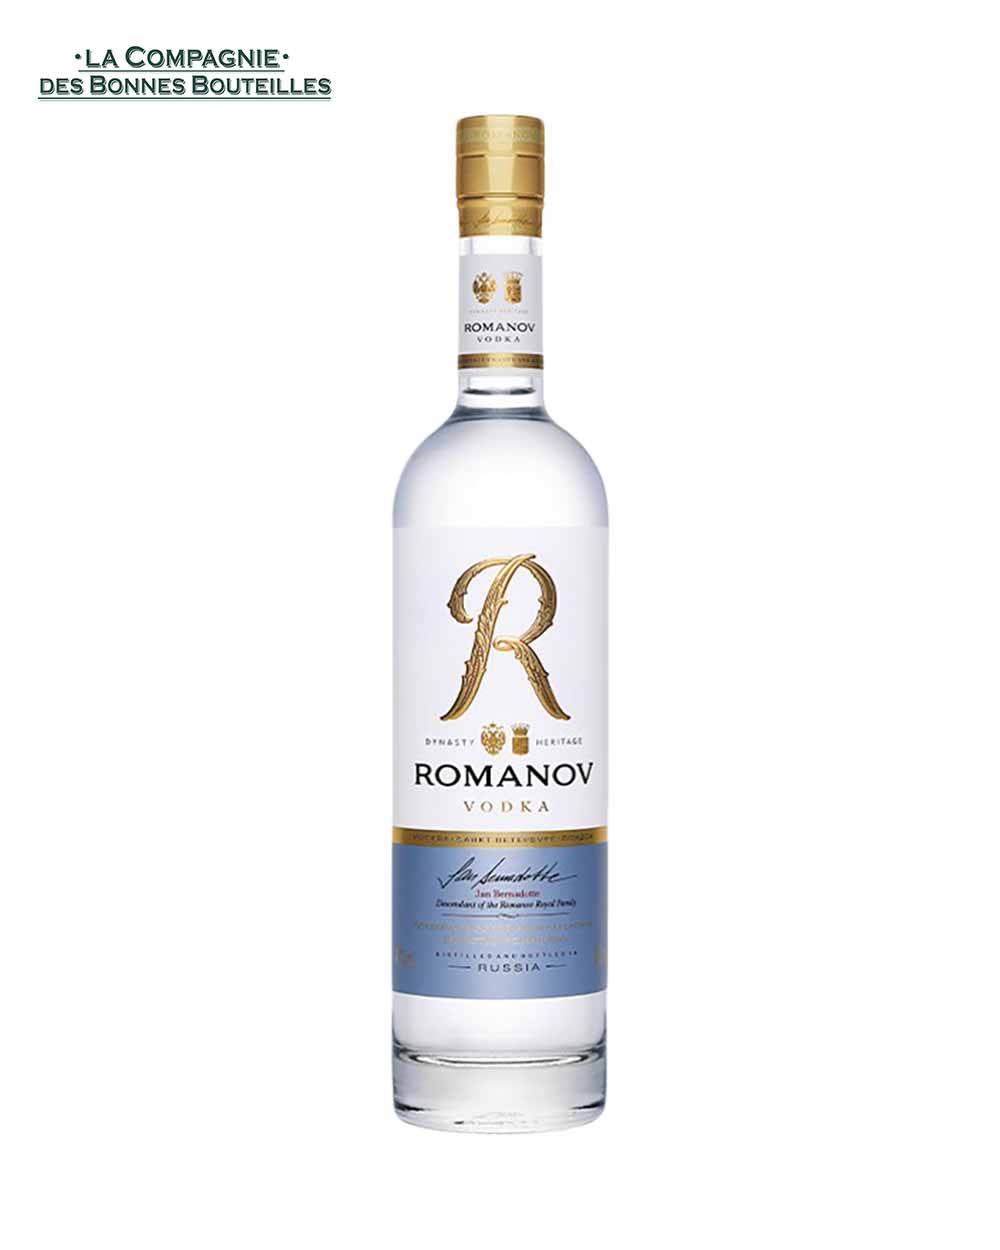 Romanov russie, vodka, 40%, 70cl